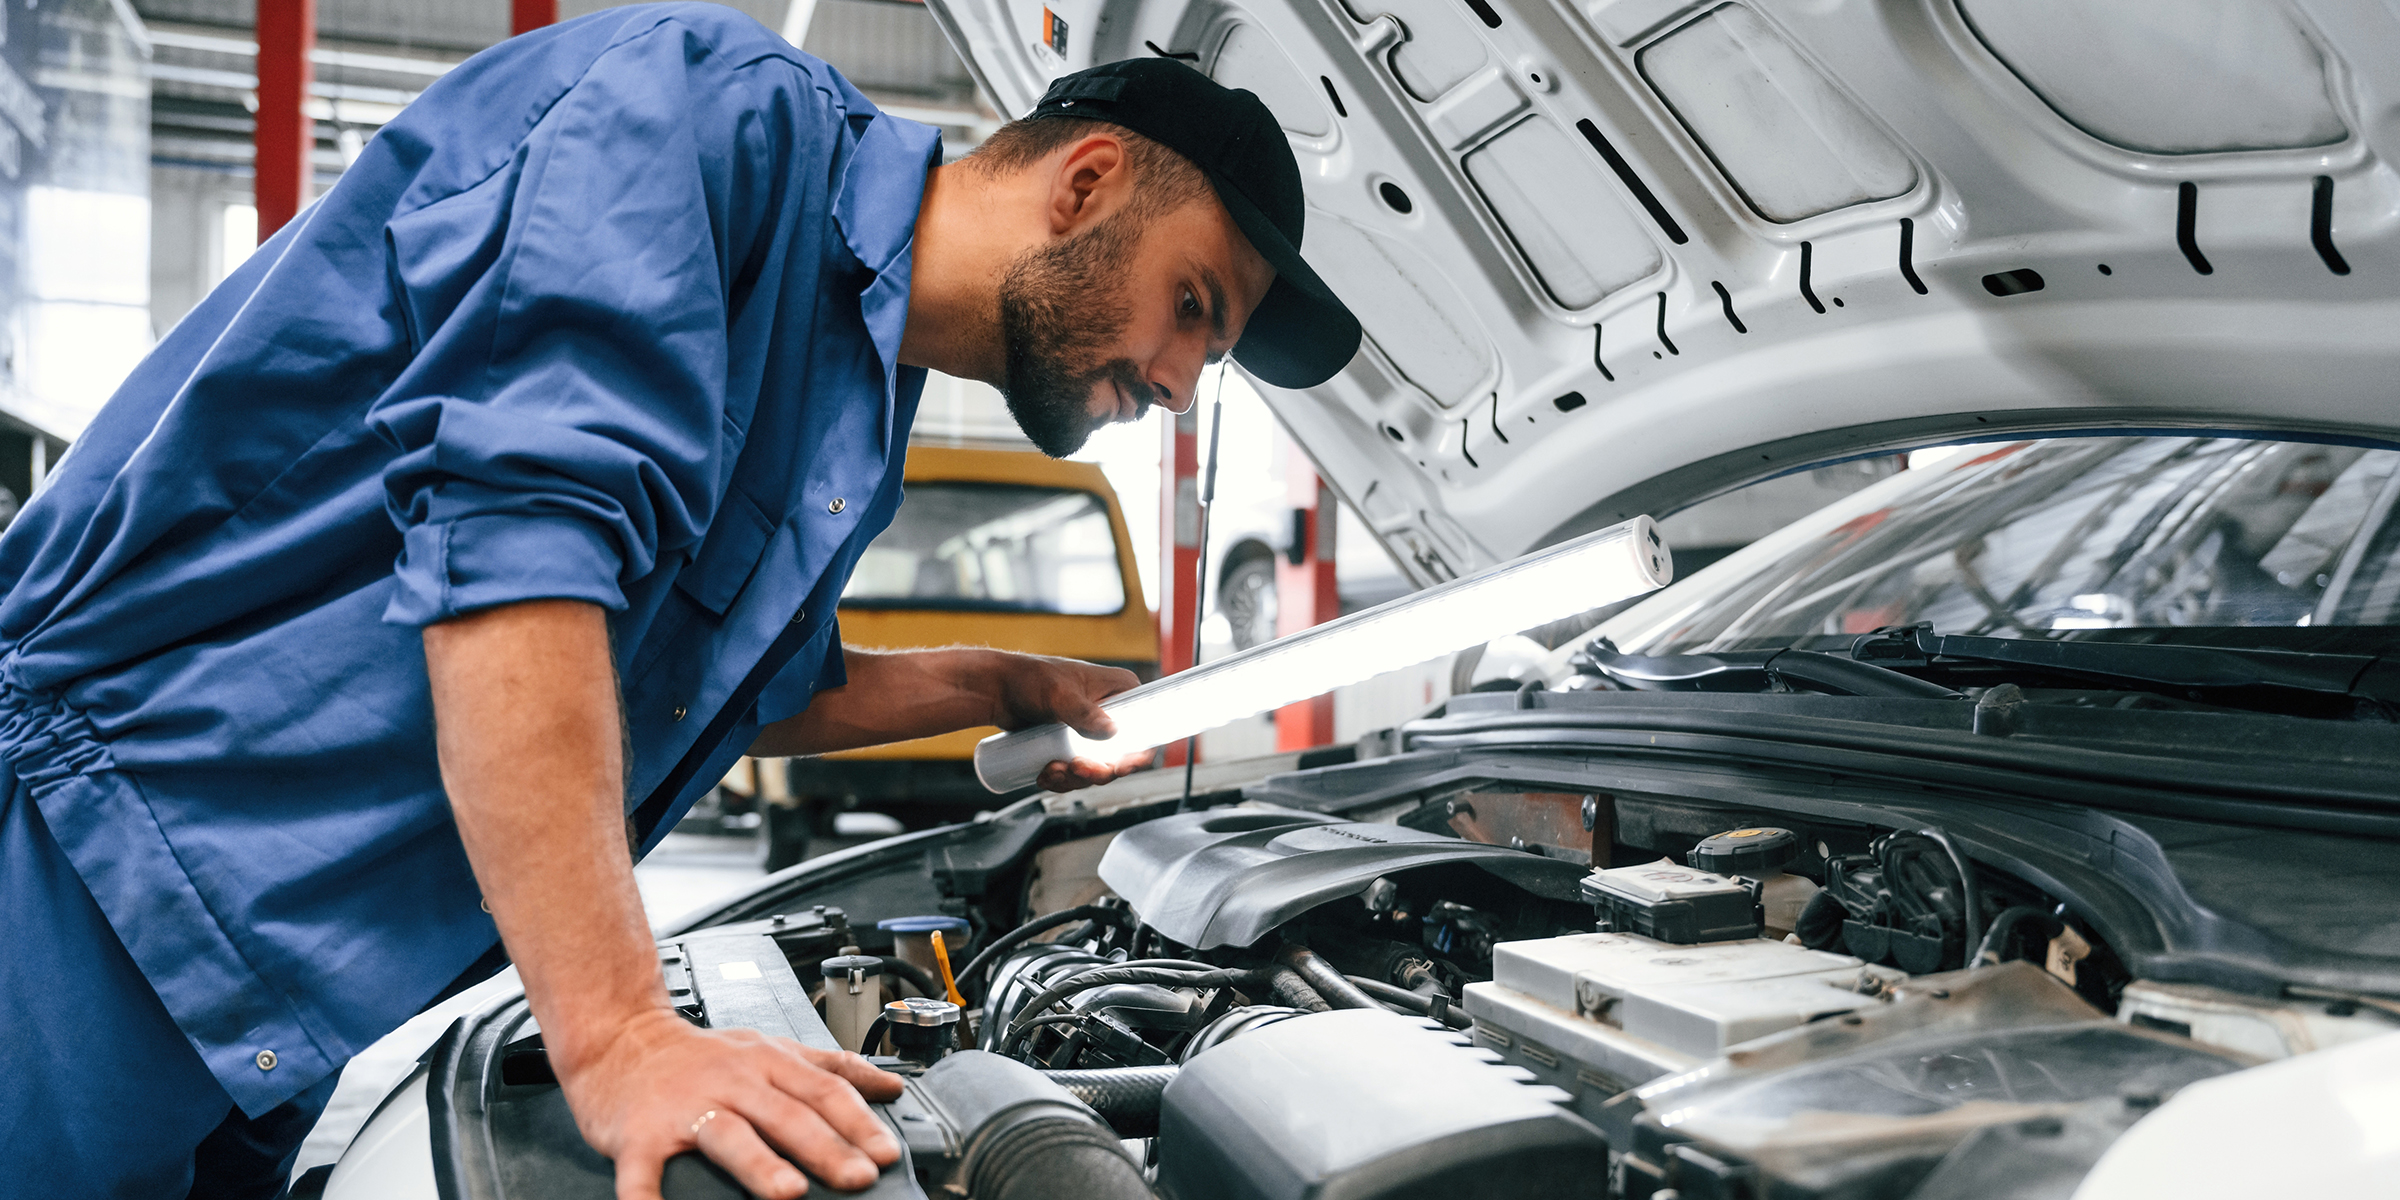 A mechanic working on a car | Source: Shutterstock